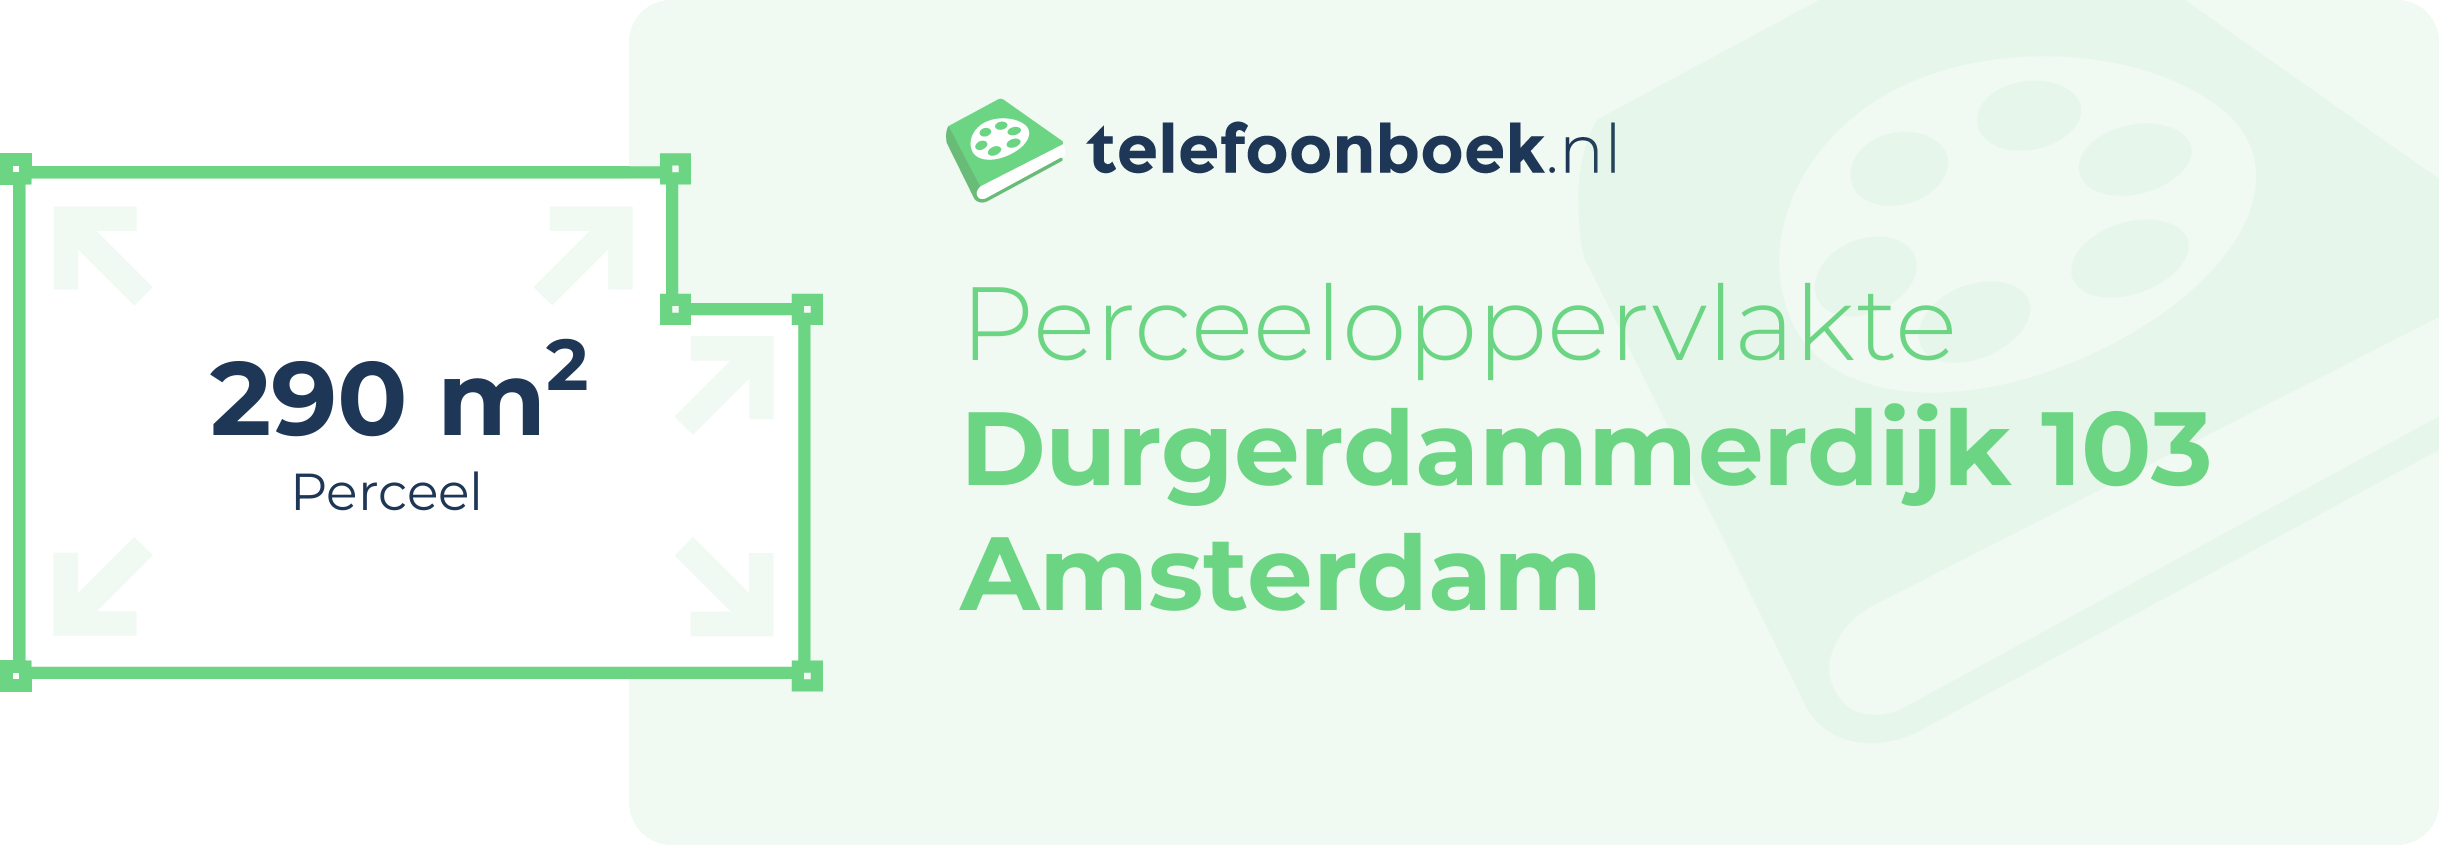 Perceeloppervlakte Durgerdammerdijk 103 Amsterdam